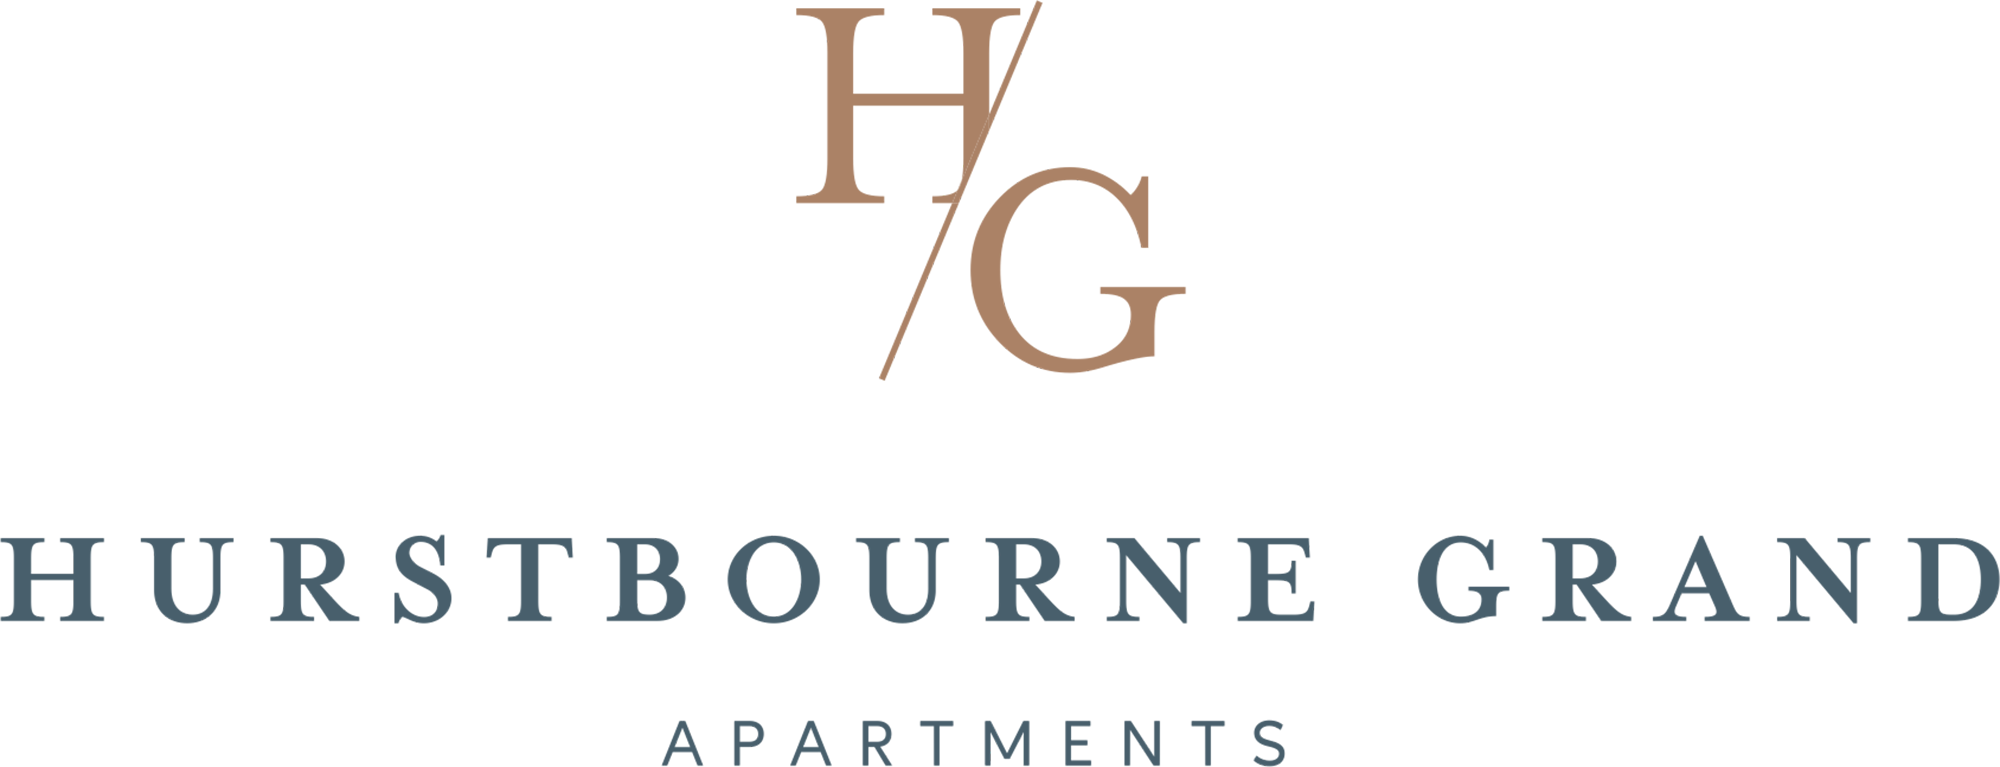 Hurstbourne Grand Apartments